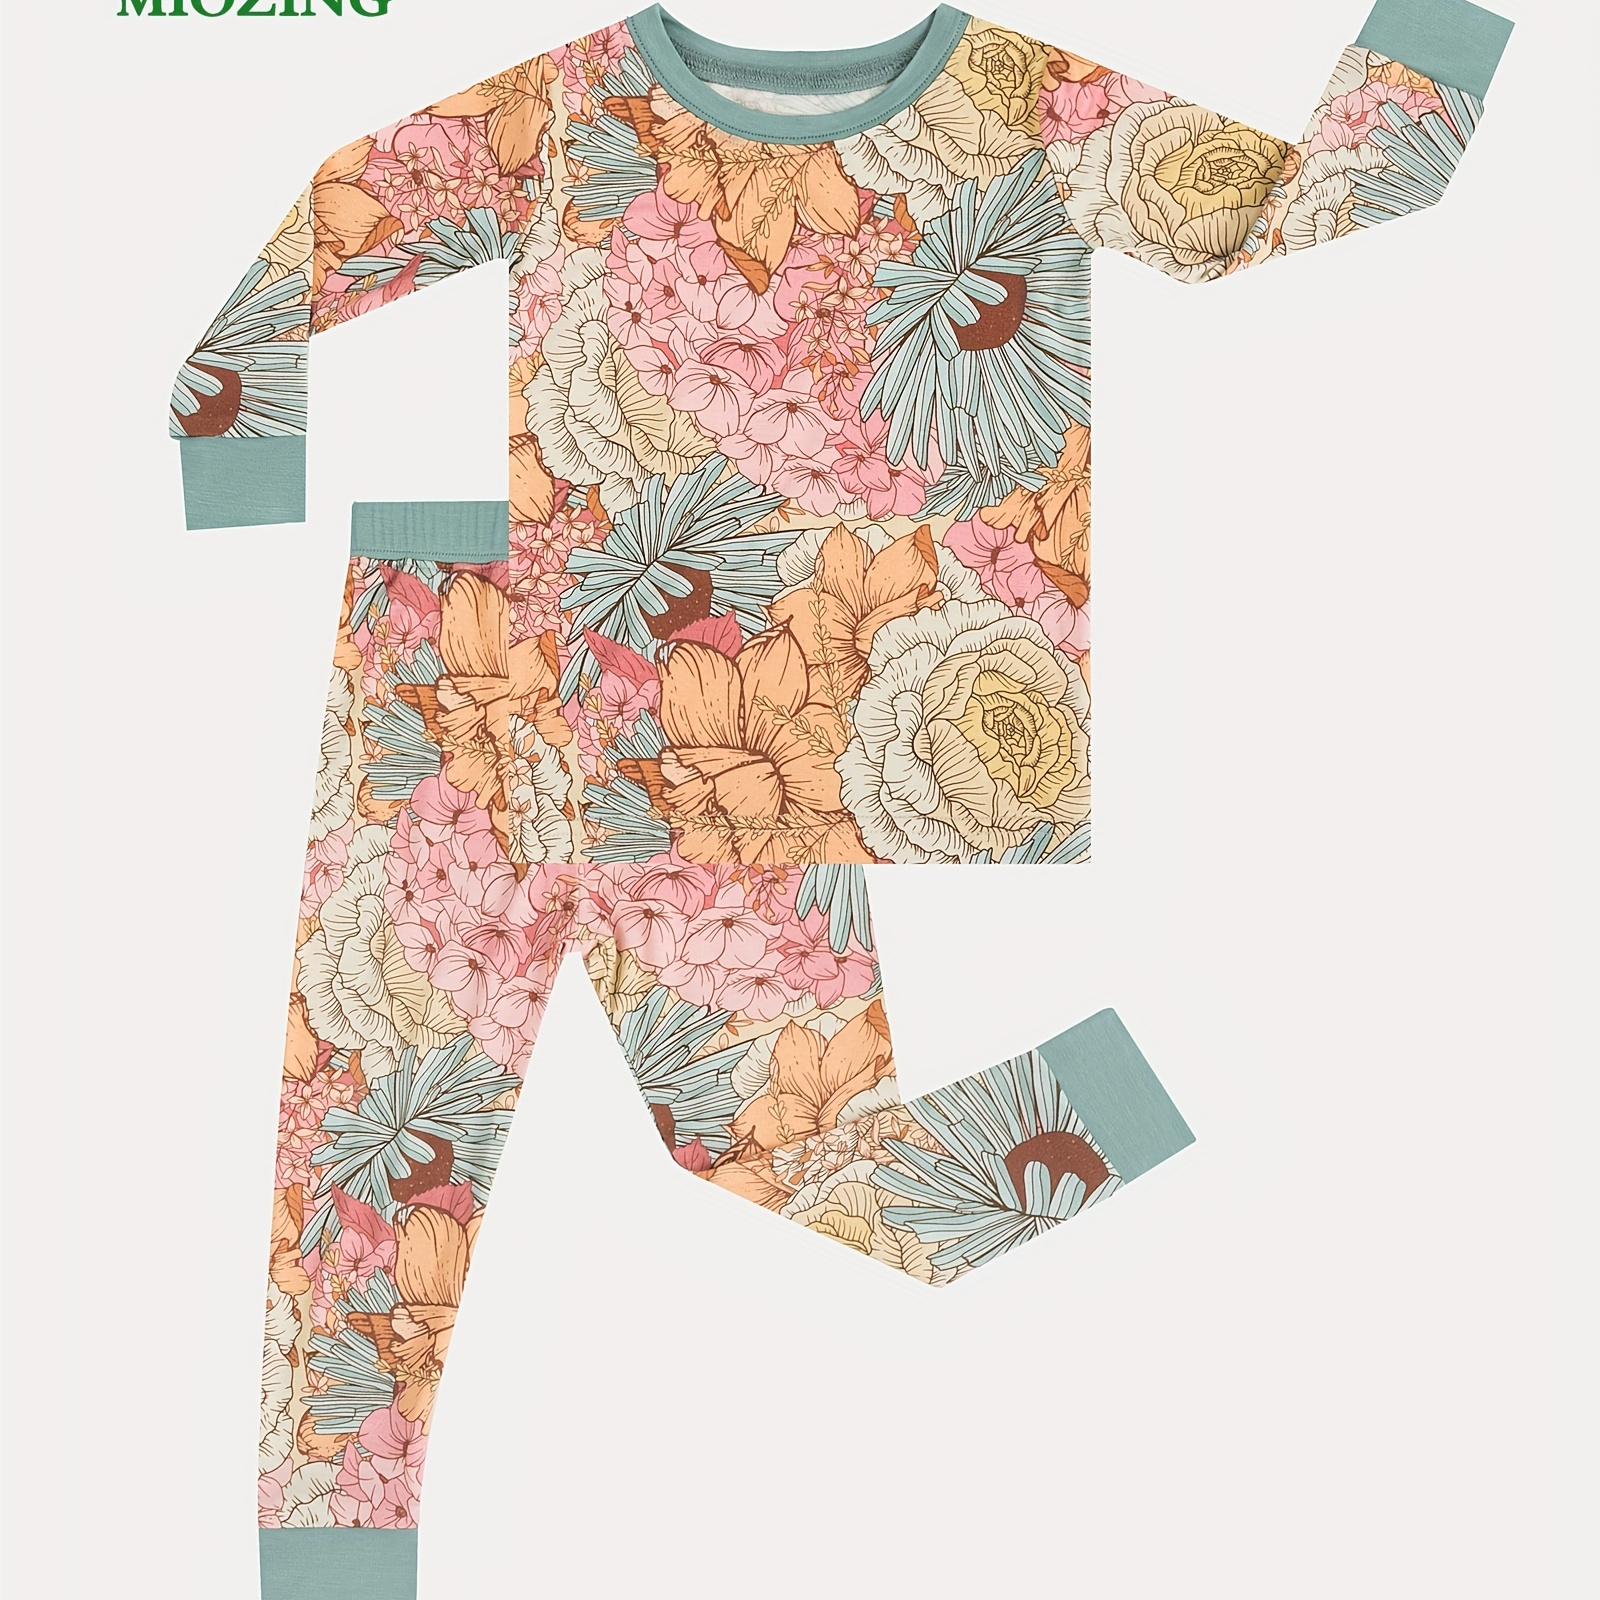 

Miozing Little Girls Bean Green Flower Print Comfy High-end Bamboo Fiber Cute & Elastic Top + Pants 2pcs